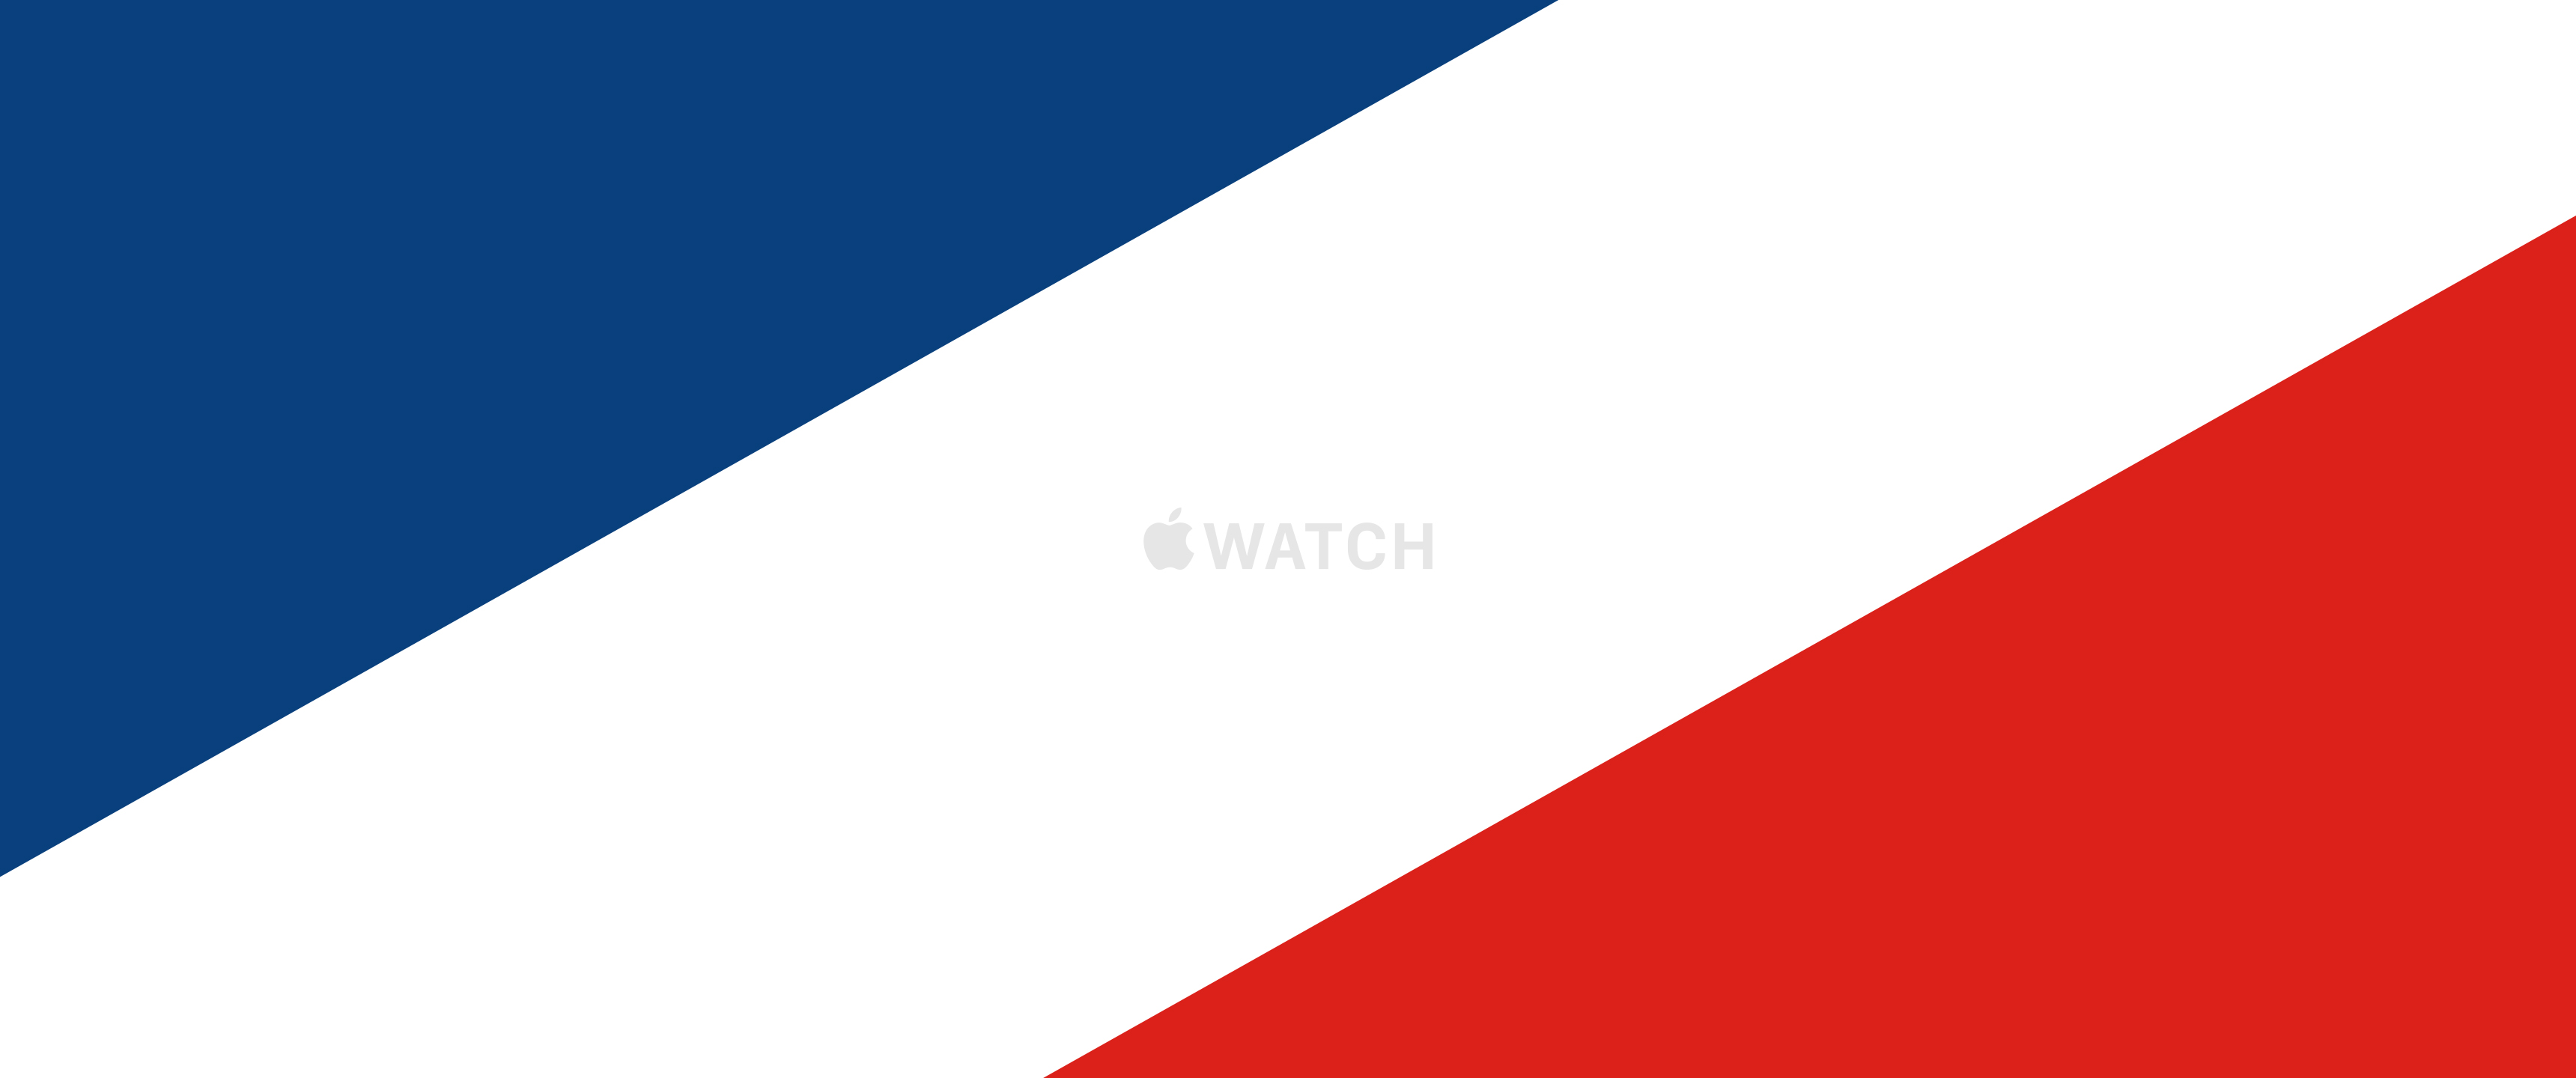 General 3440x1440 France French flag flag blue white red Apple Watch watch digital art ultrawide